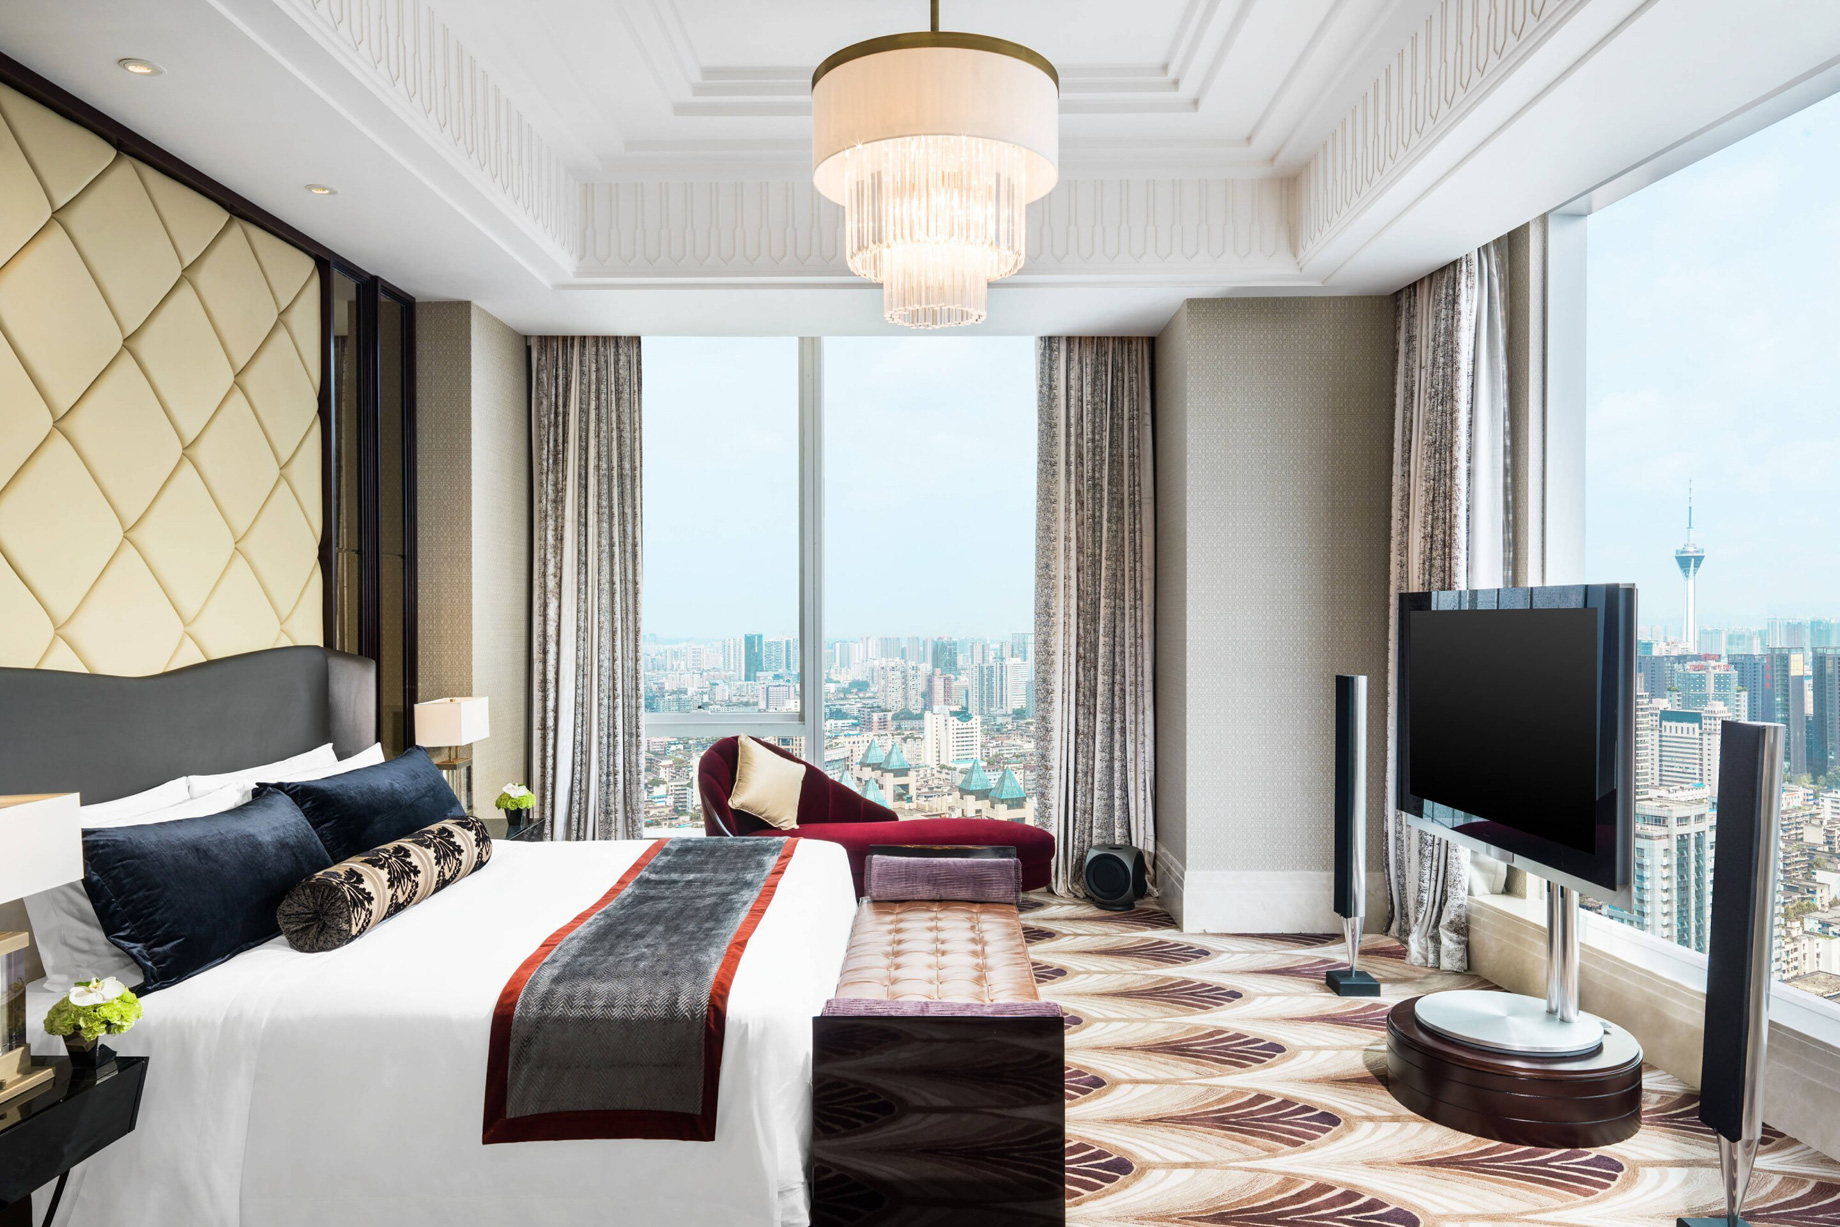 The St. Regis Chengdu Hotel - Chengdu, Sichuan, China - Presidential Suite Master Bedroom